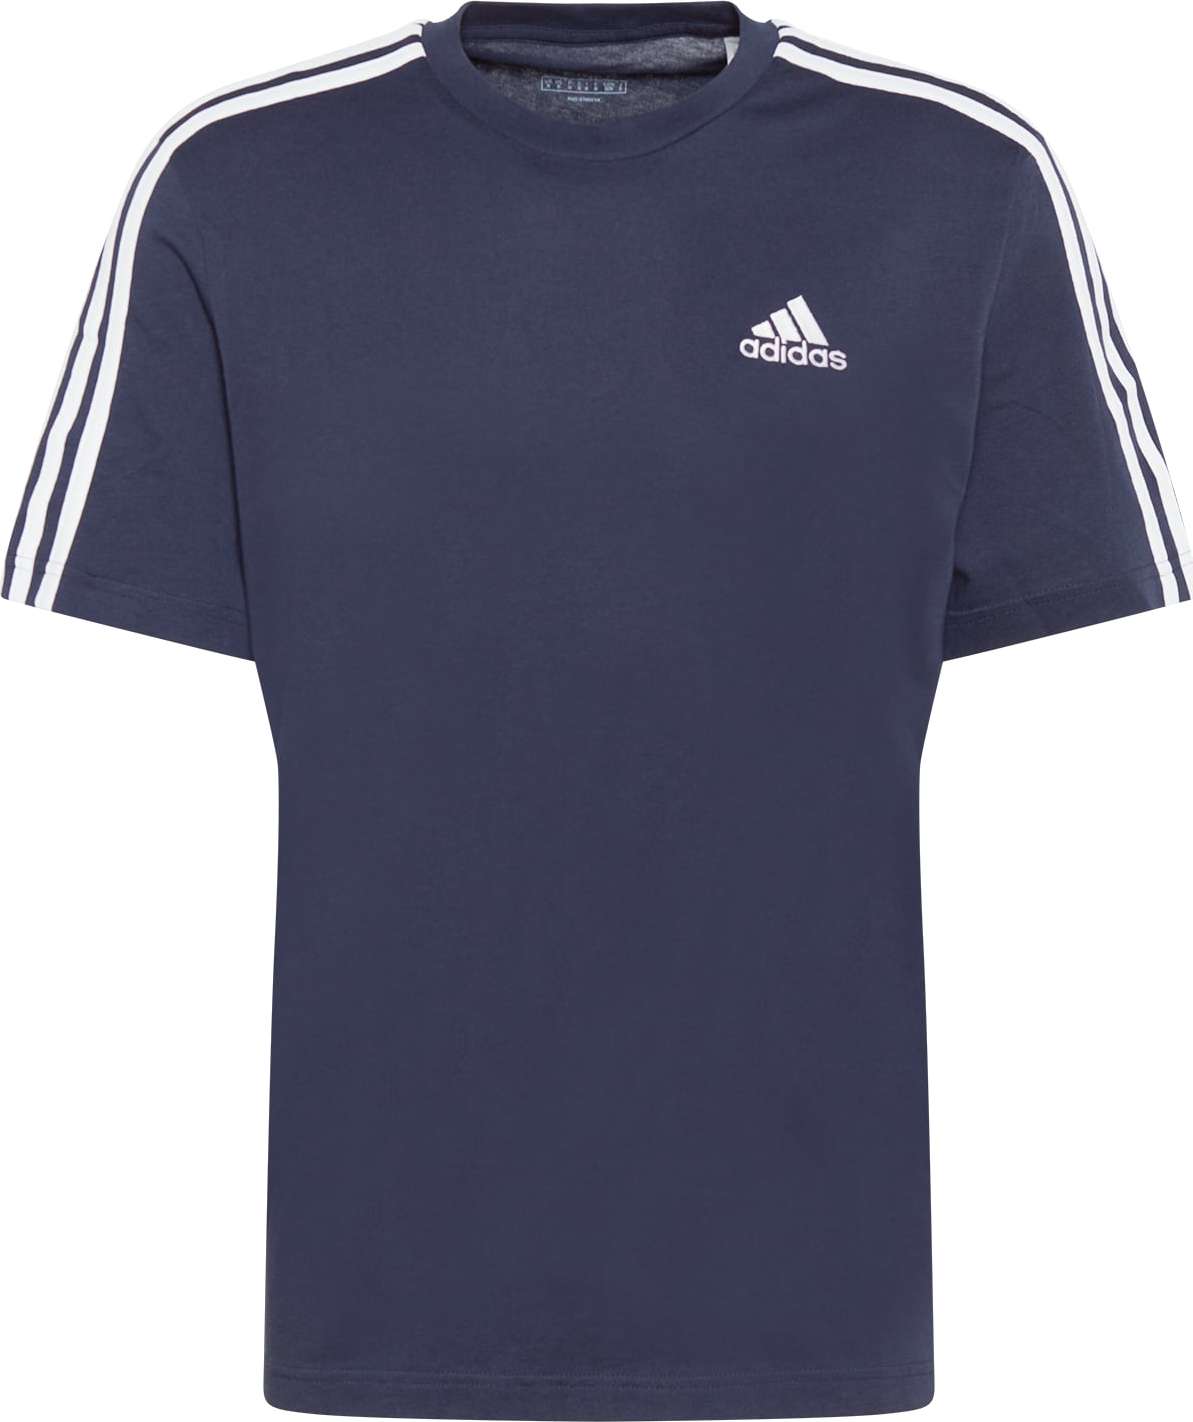 ADIDAS SPORTSWEAR Funkční tričko marine modrá / bílá